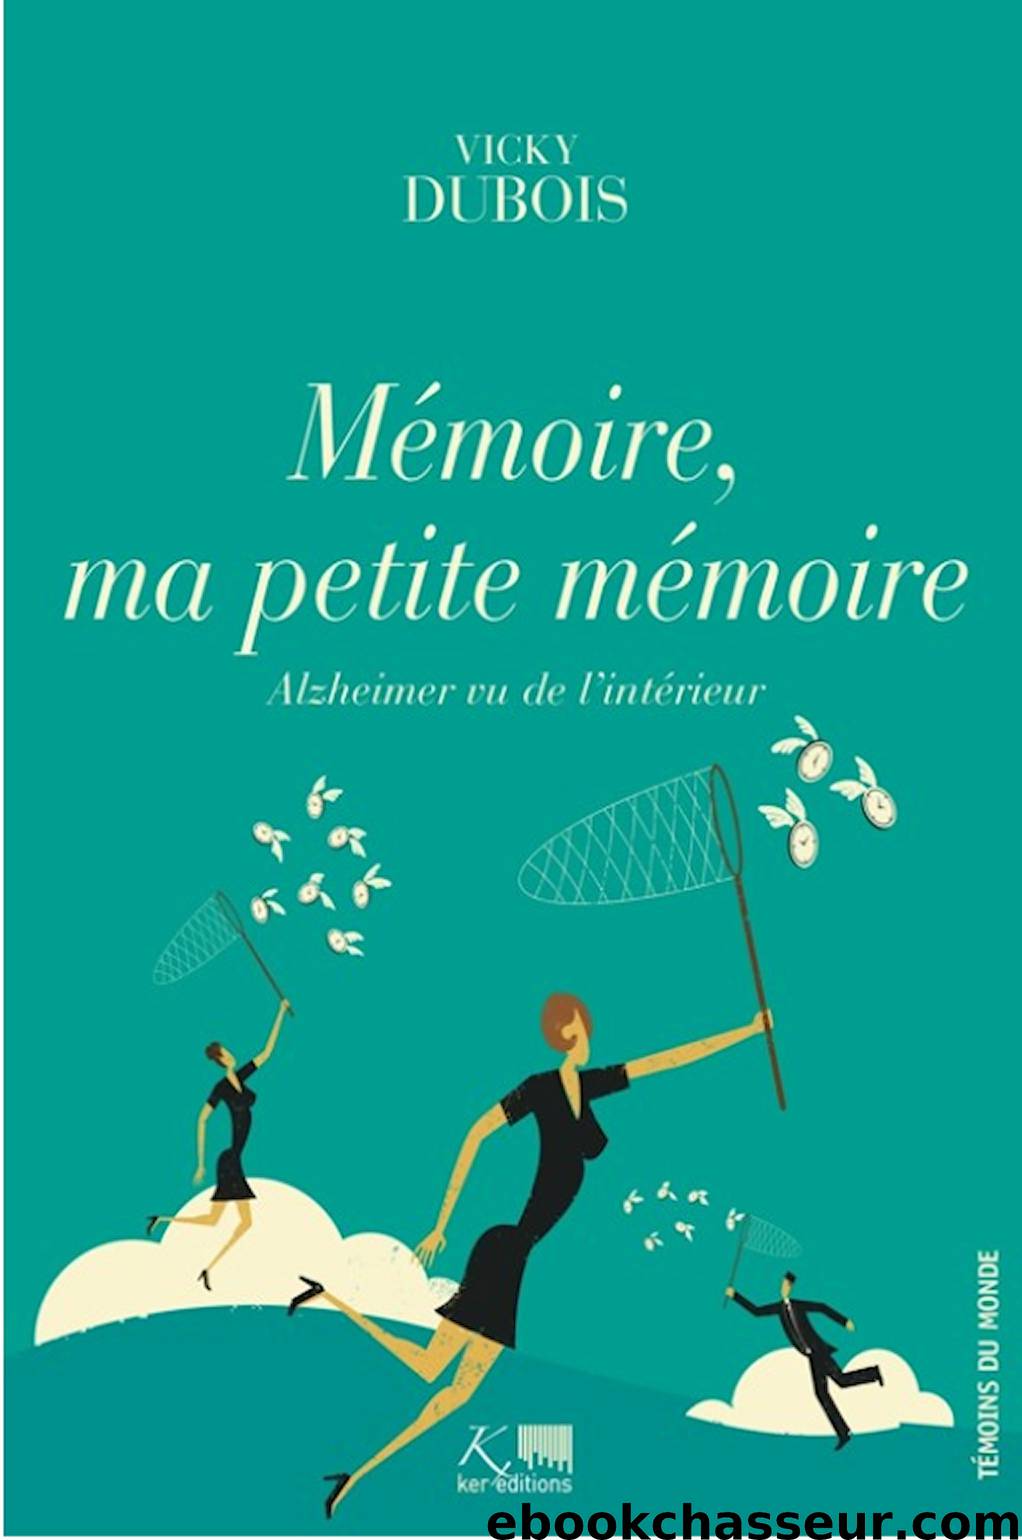 Mémoire, ma petite mémoire (Ker, 22 avril) by Dubois Vicky